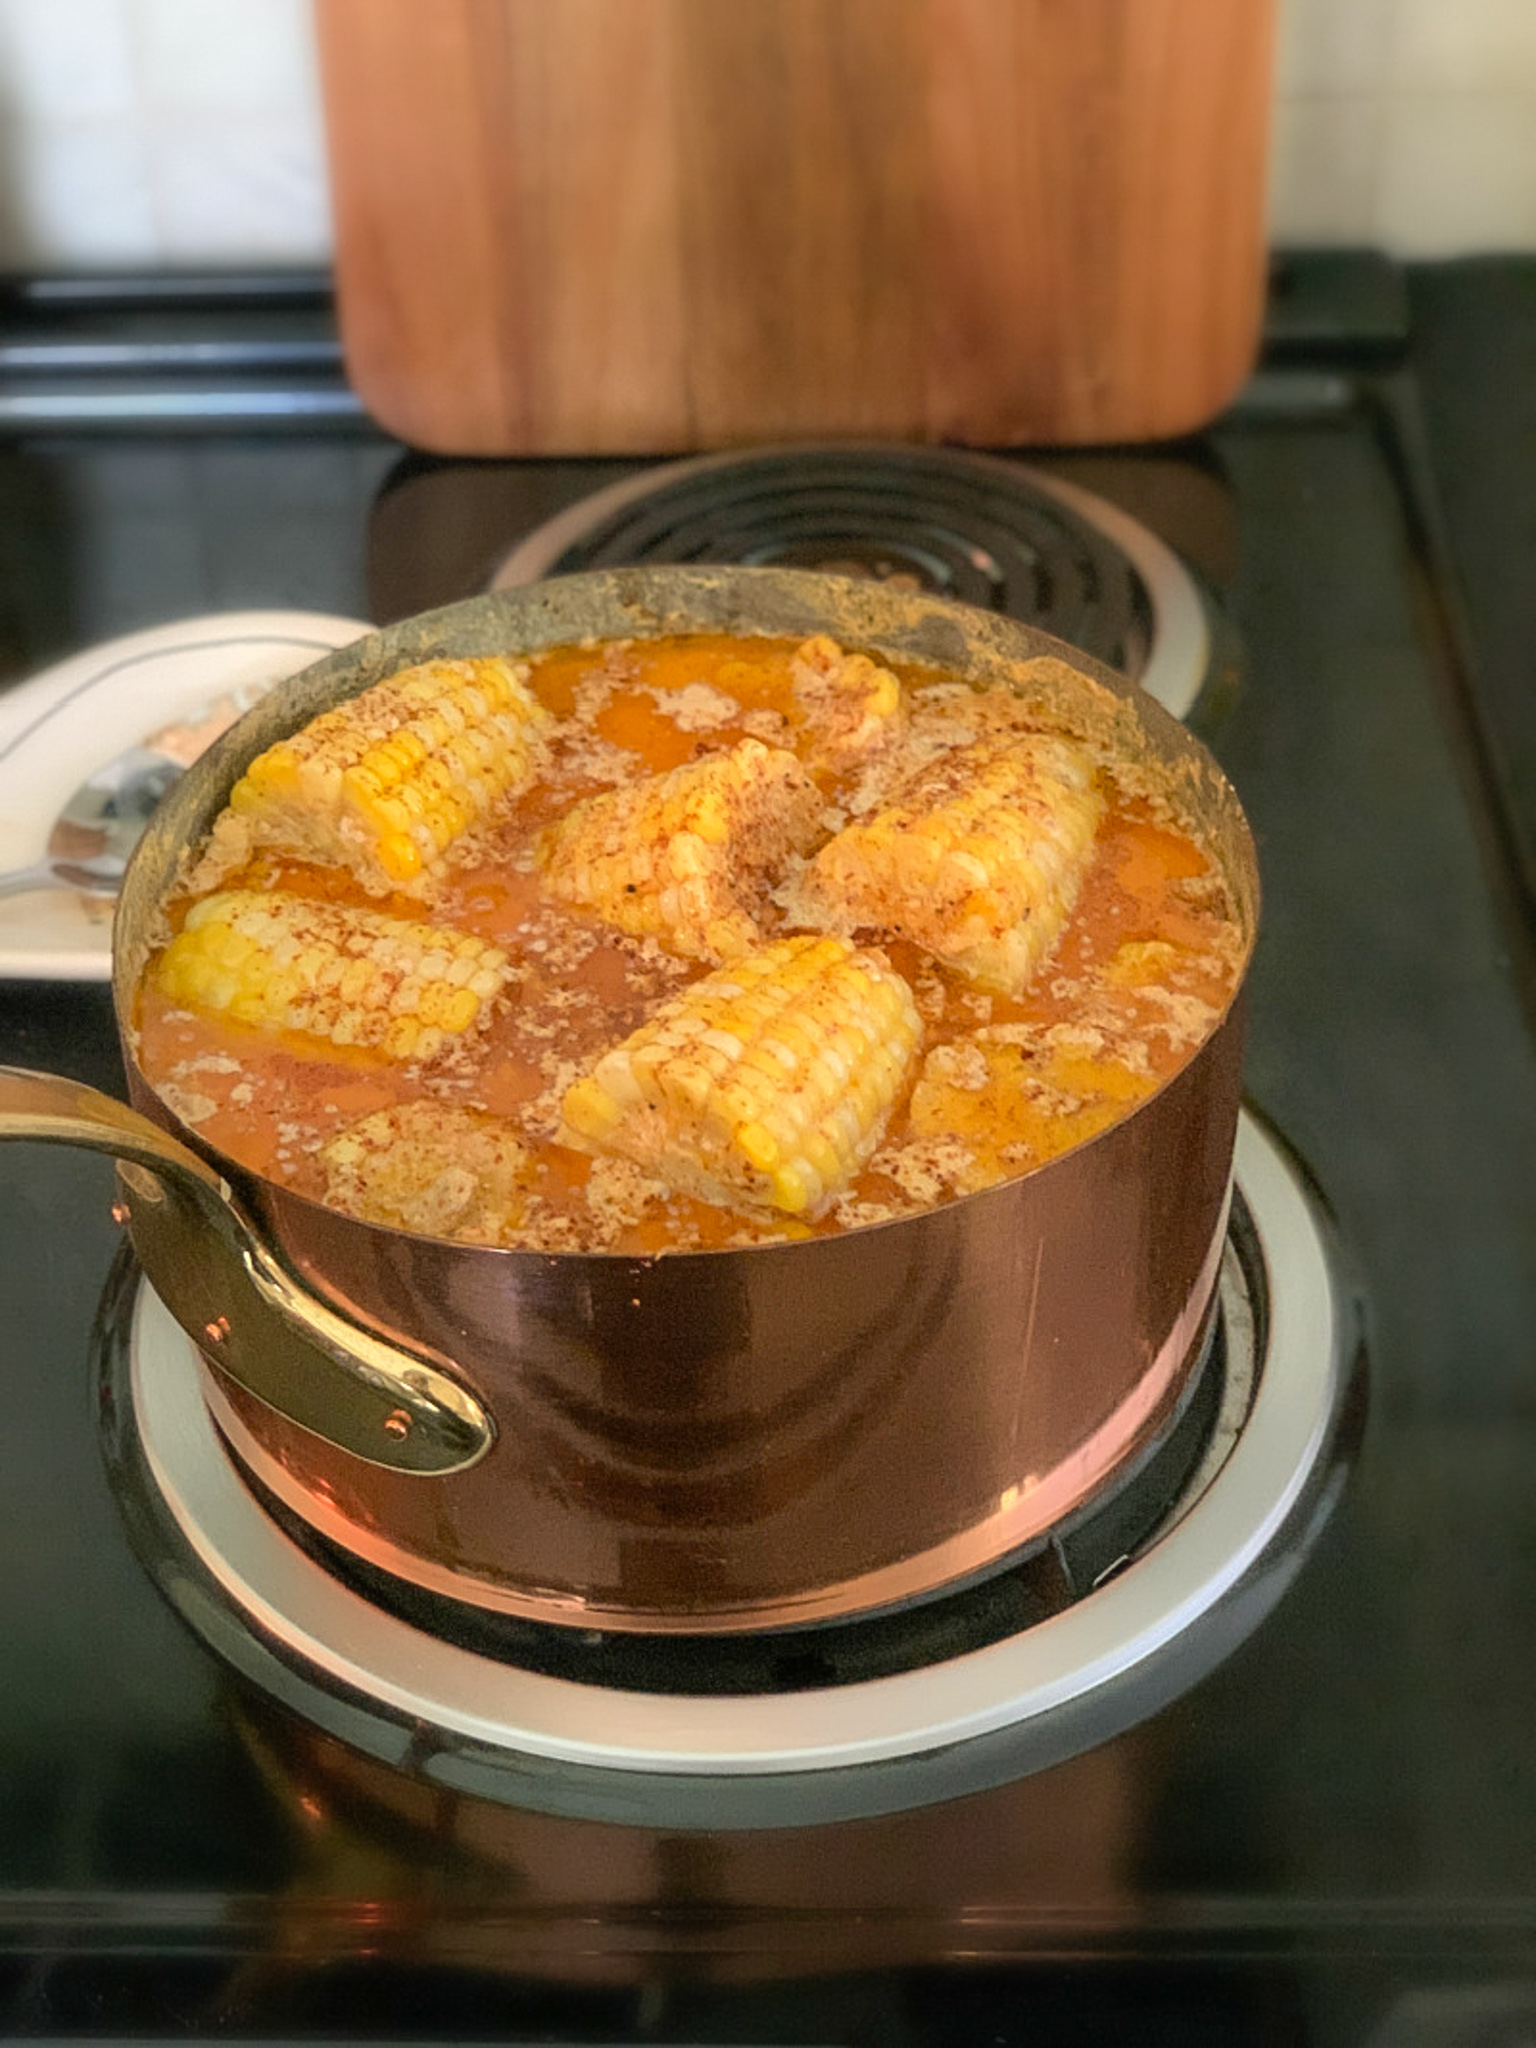 Mexican Street Corn Cornbread - Baking Bites